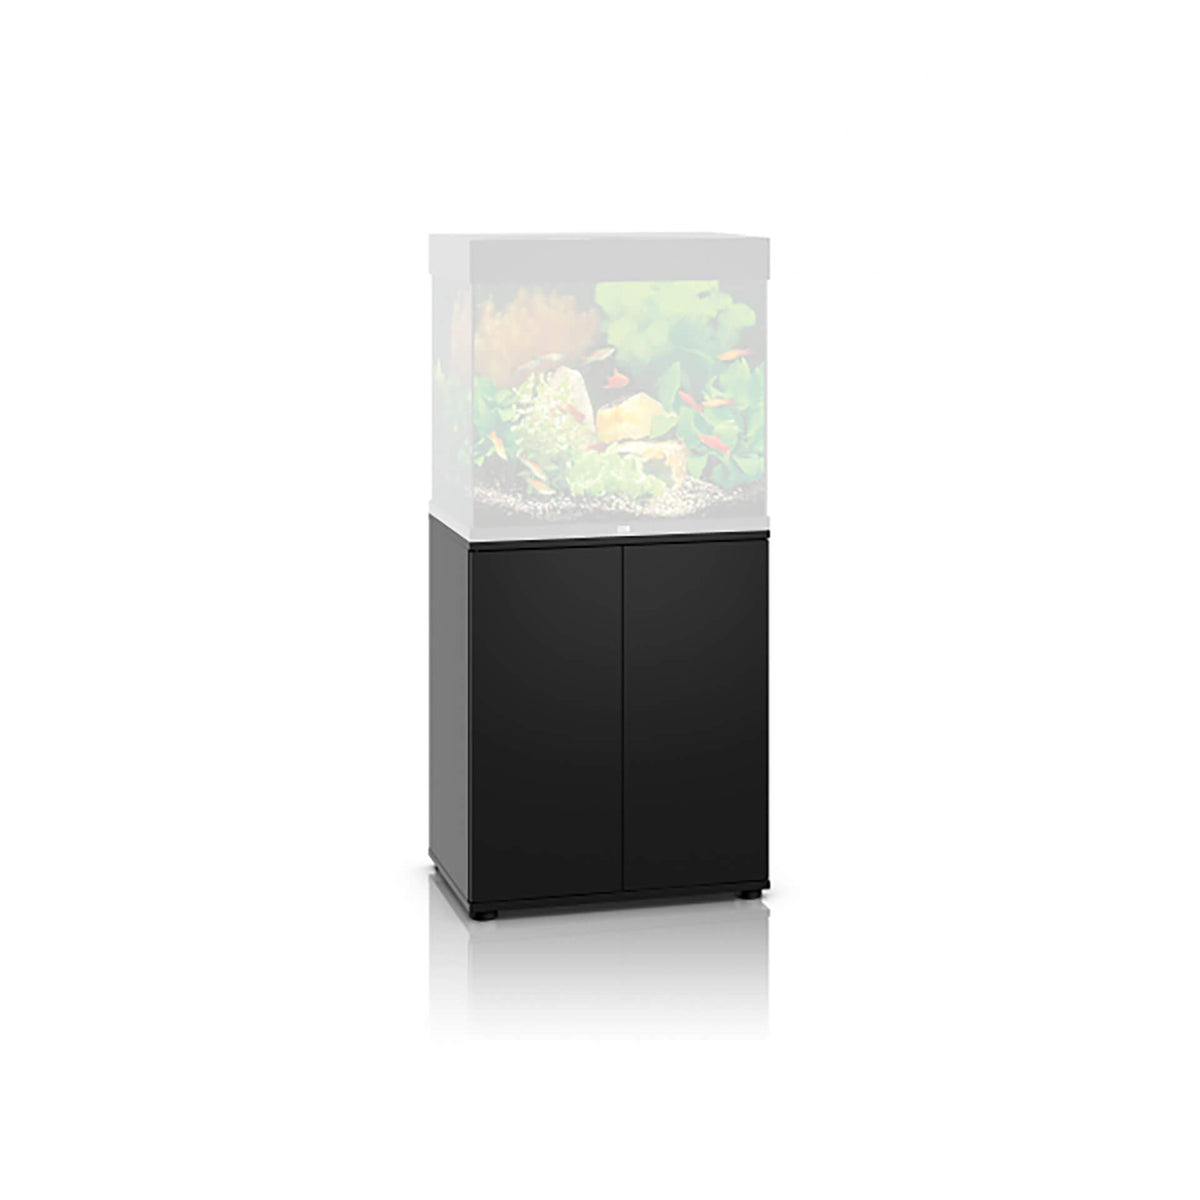 Juwel Lido 120 Black - 61 x 41 x 73cm (Cabinet Only)